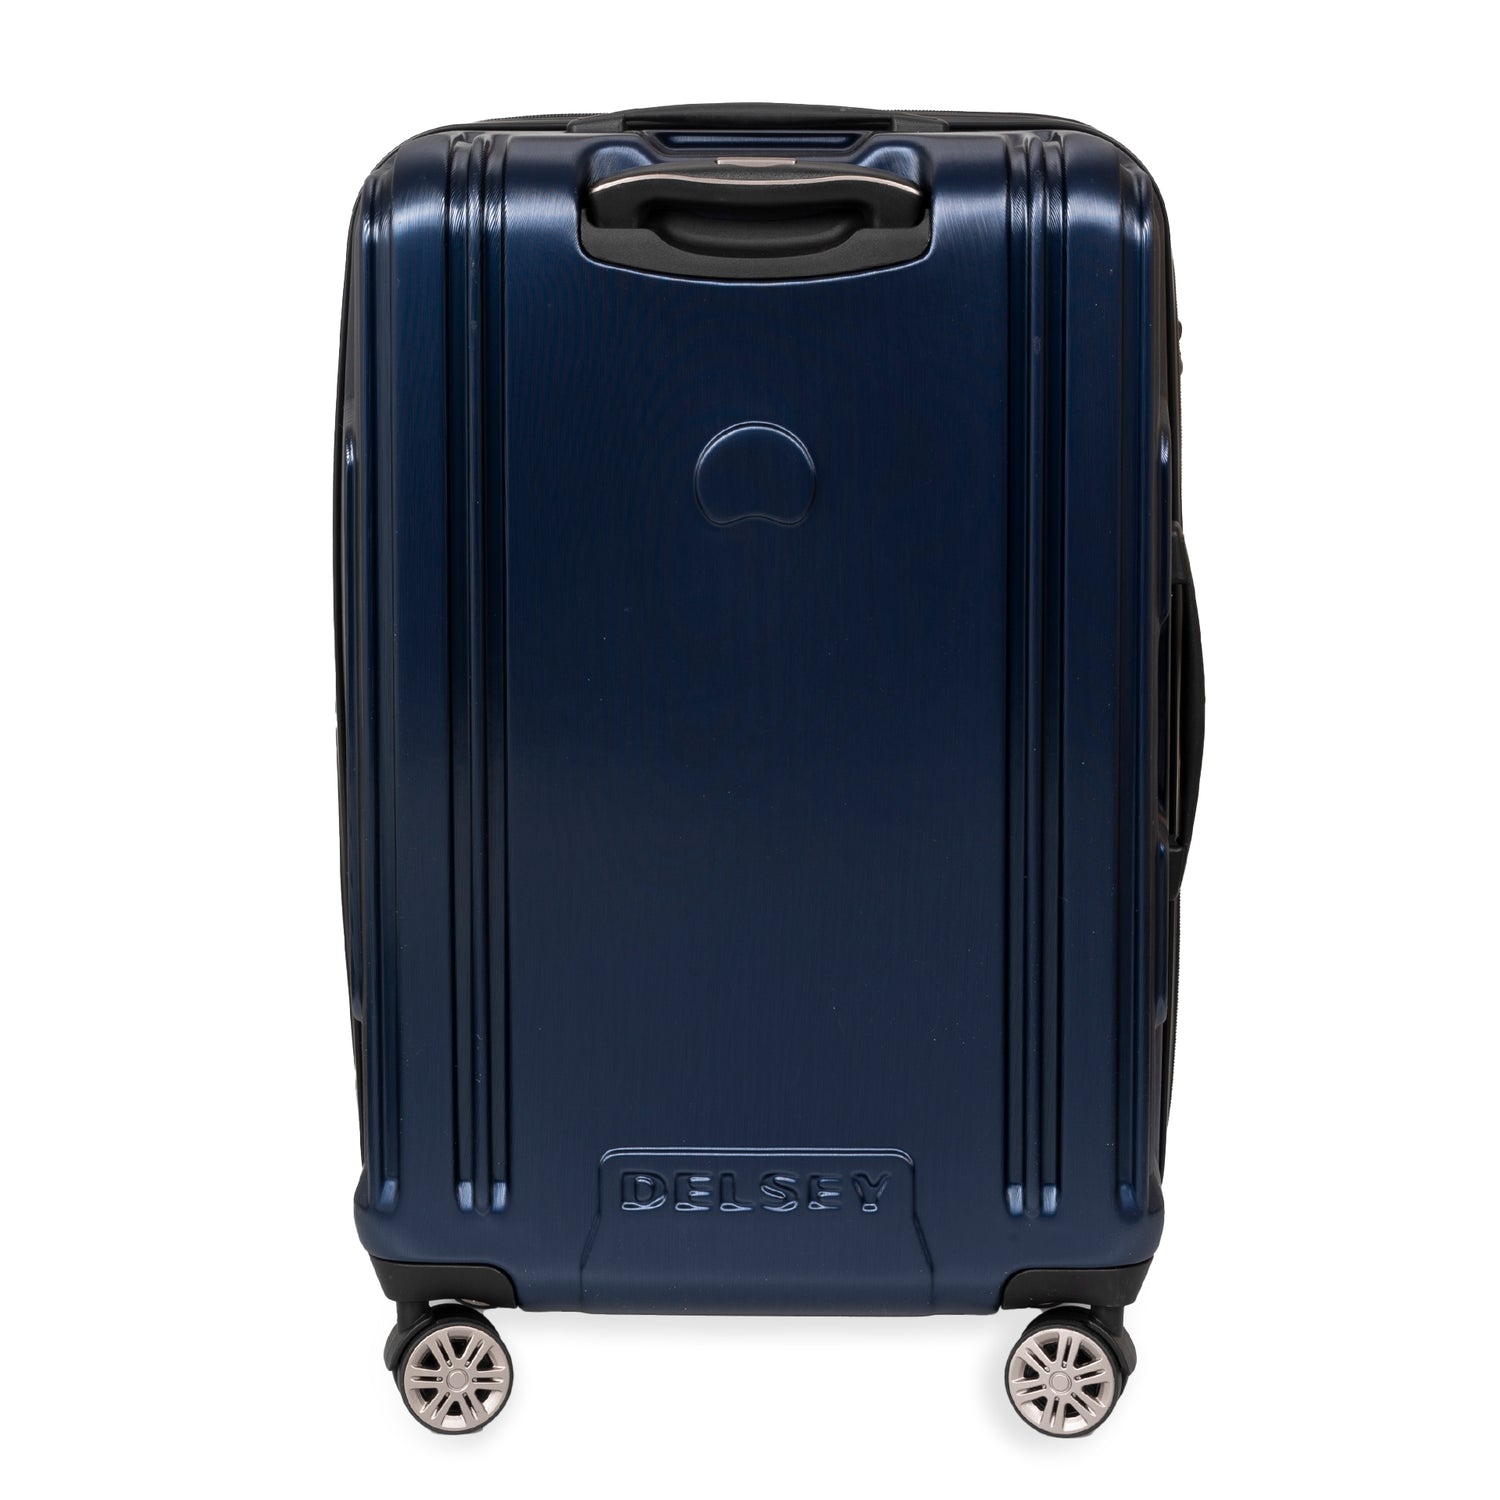 ChromeTec Hardside 24" Luggage - Bentley